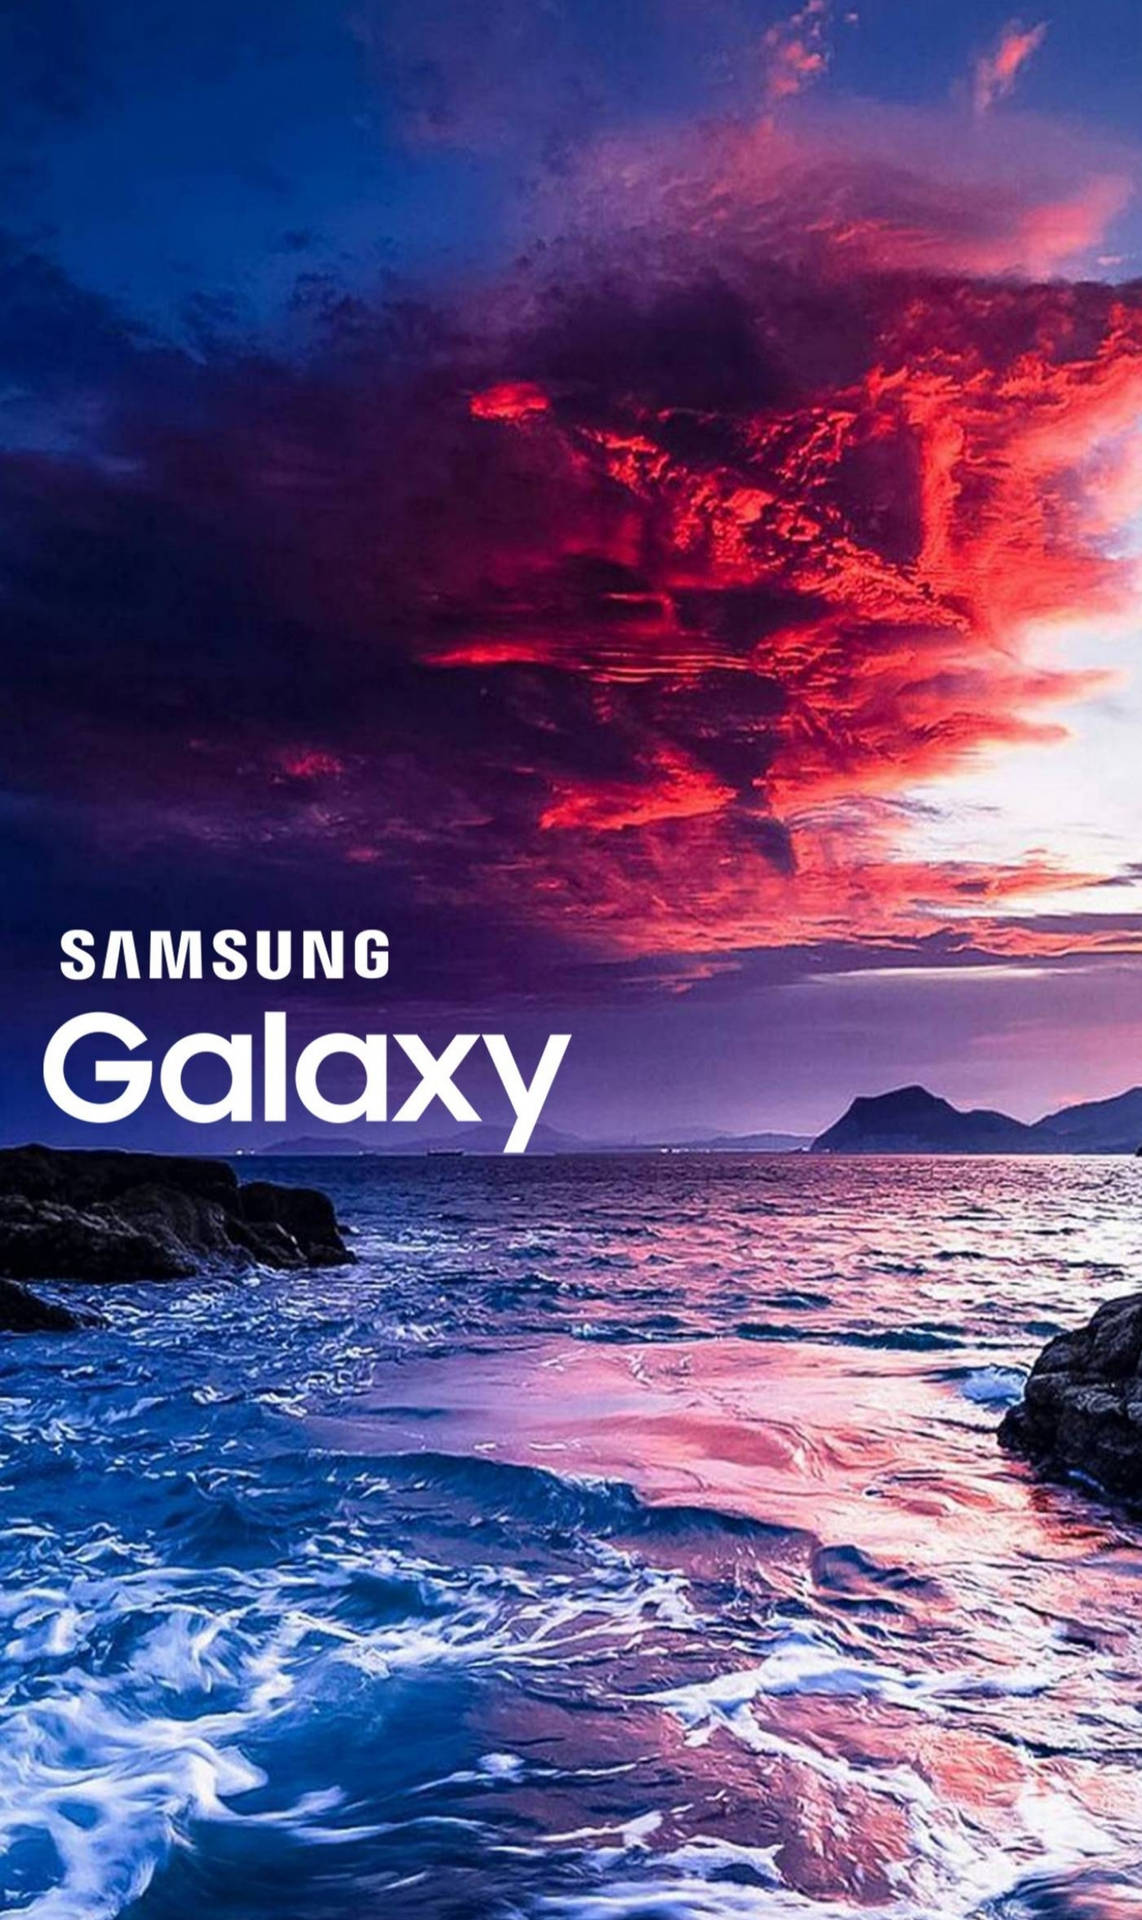 Samsung Galaxy Sunset Over Ocean